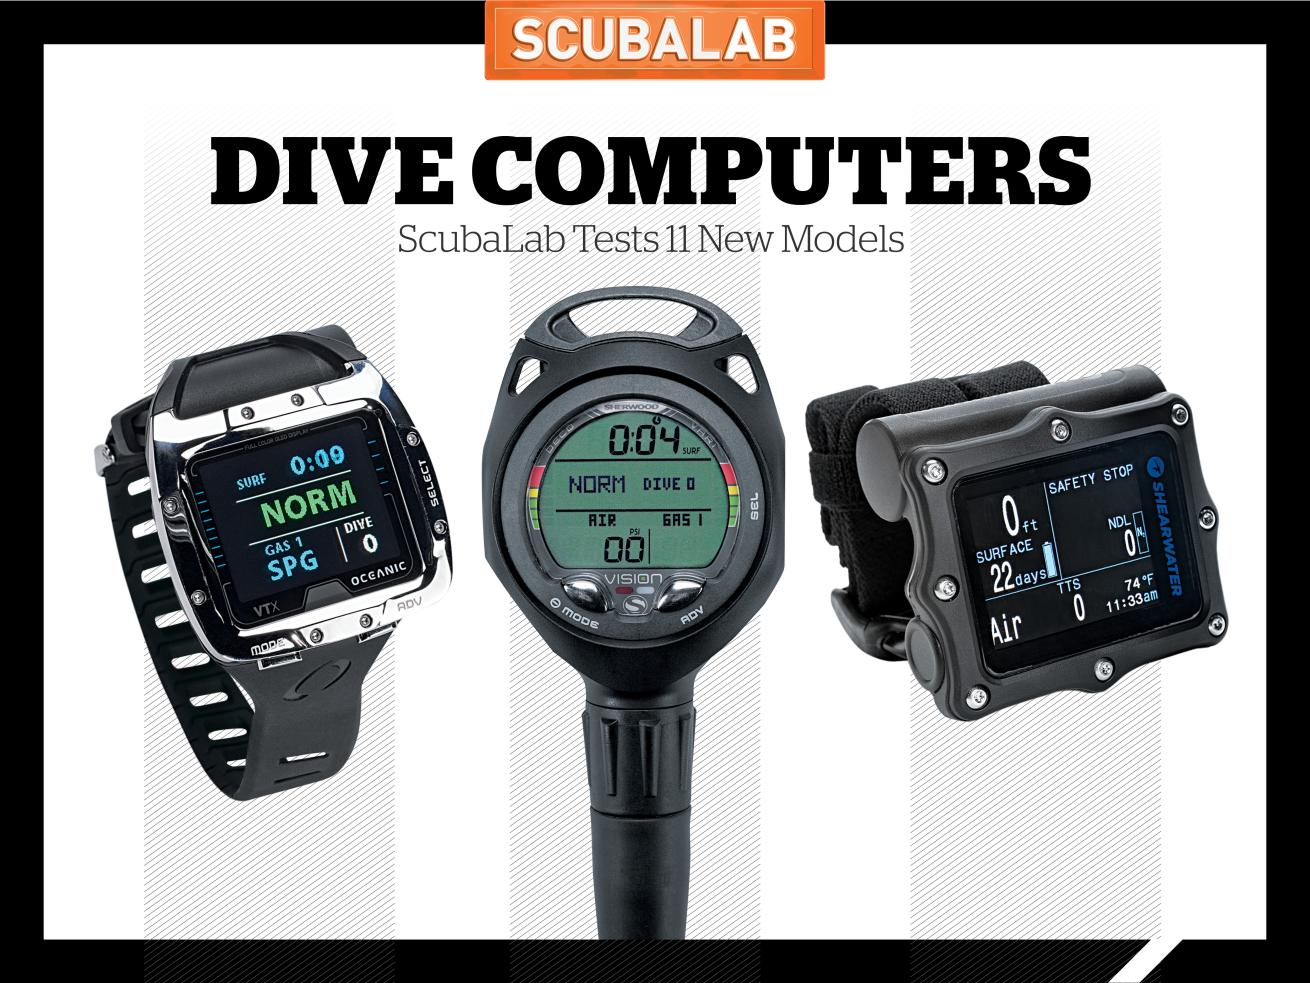 ScubaLab dive computer gear review 2106.